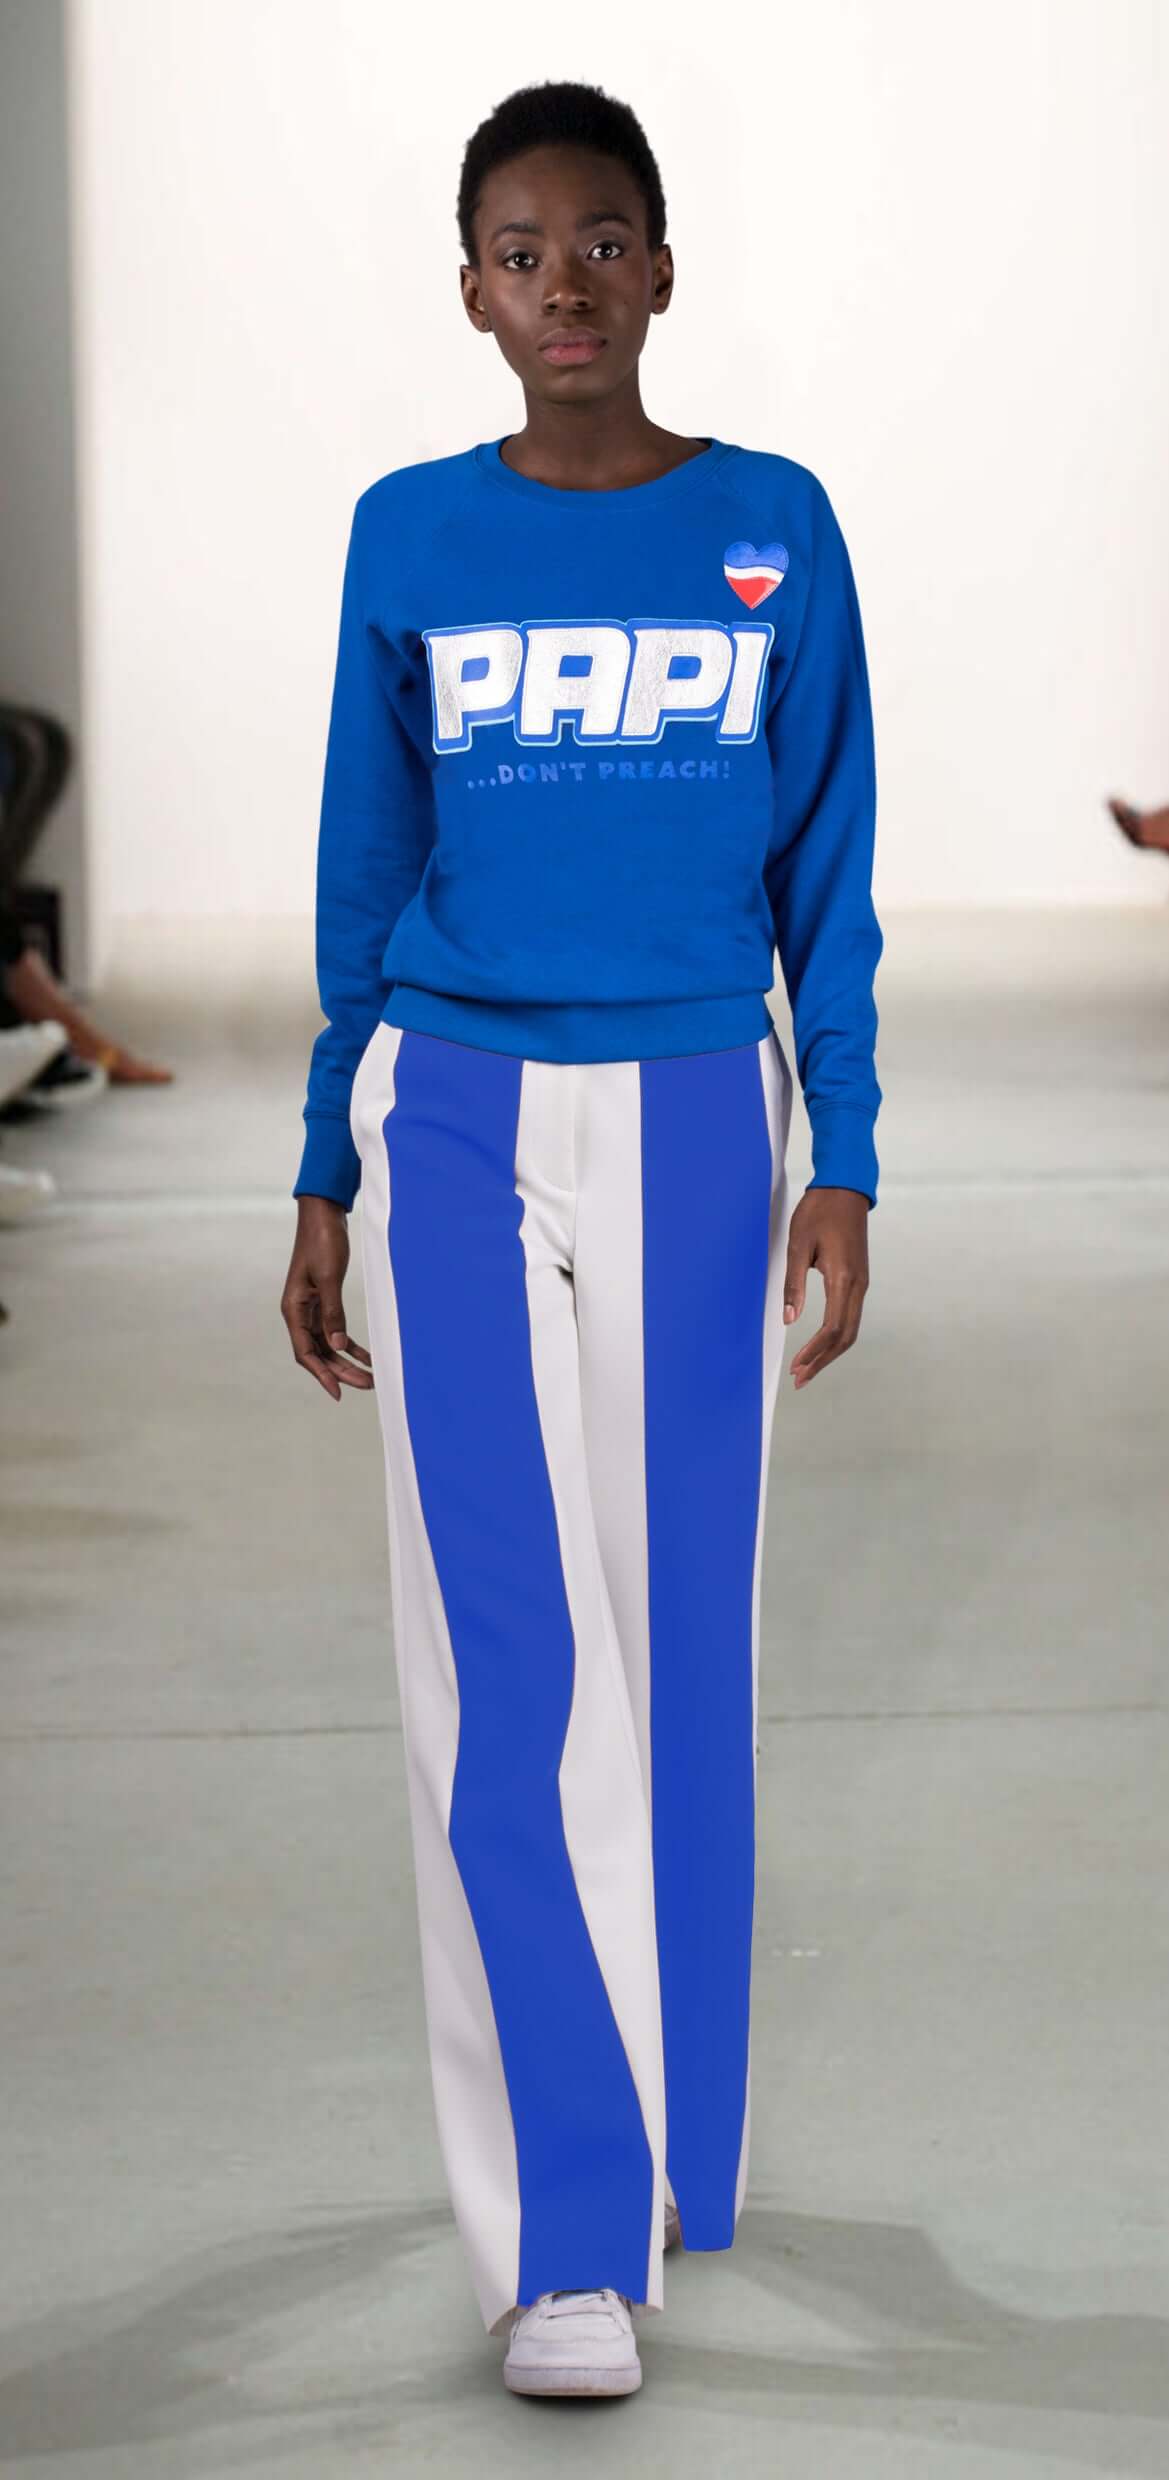 Sweatshirt "Papi" - royal blue (model)